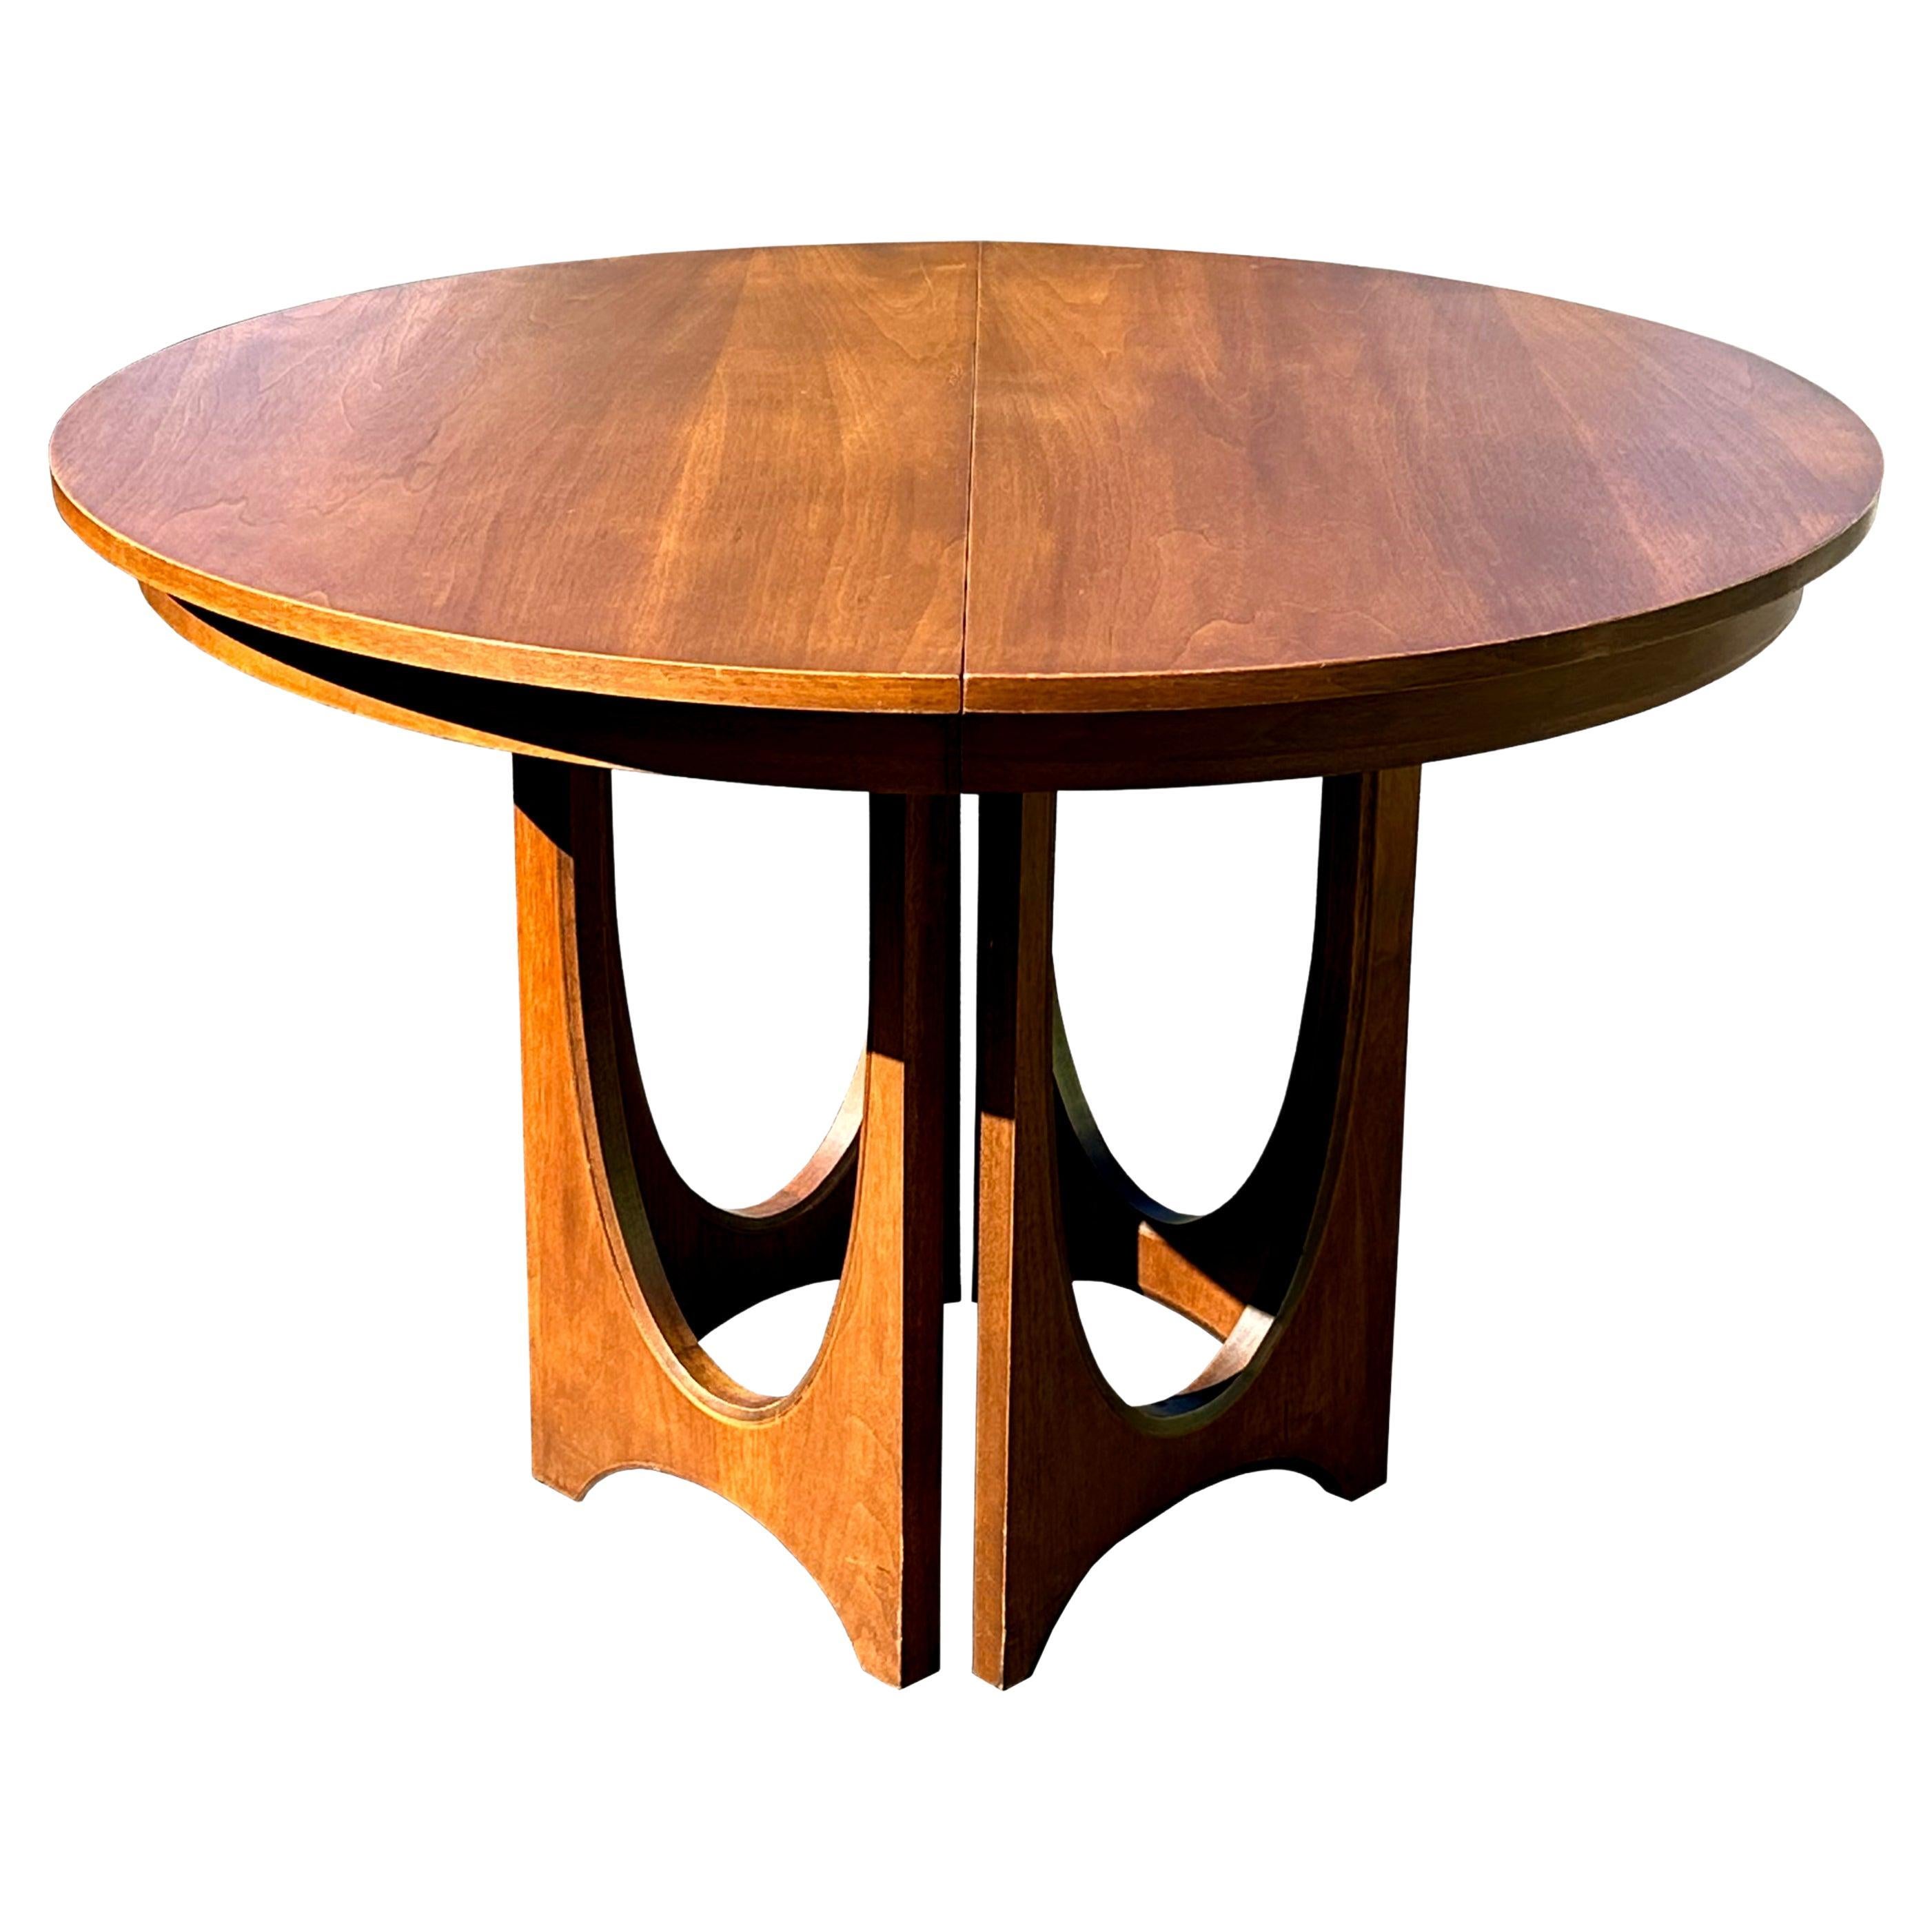 Broyhill Brasilia Midcentury Round Walnut Pedestal Dining Table, 3 Leaves